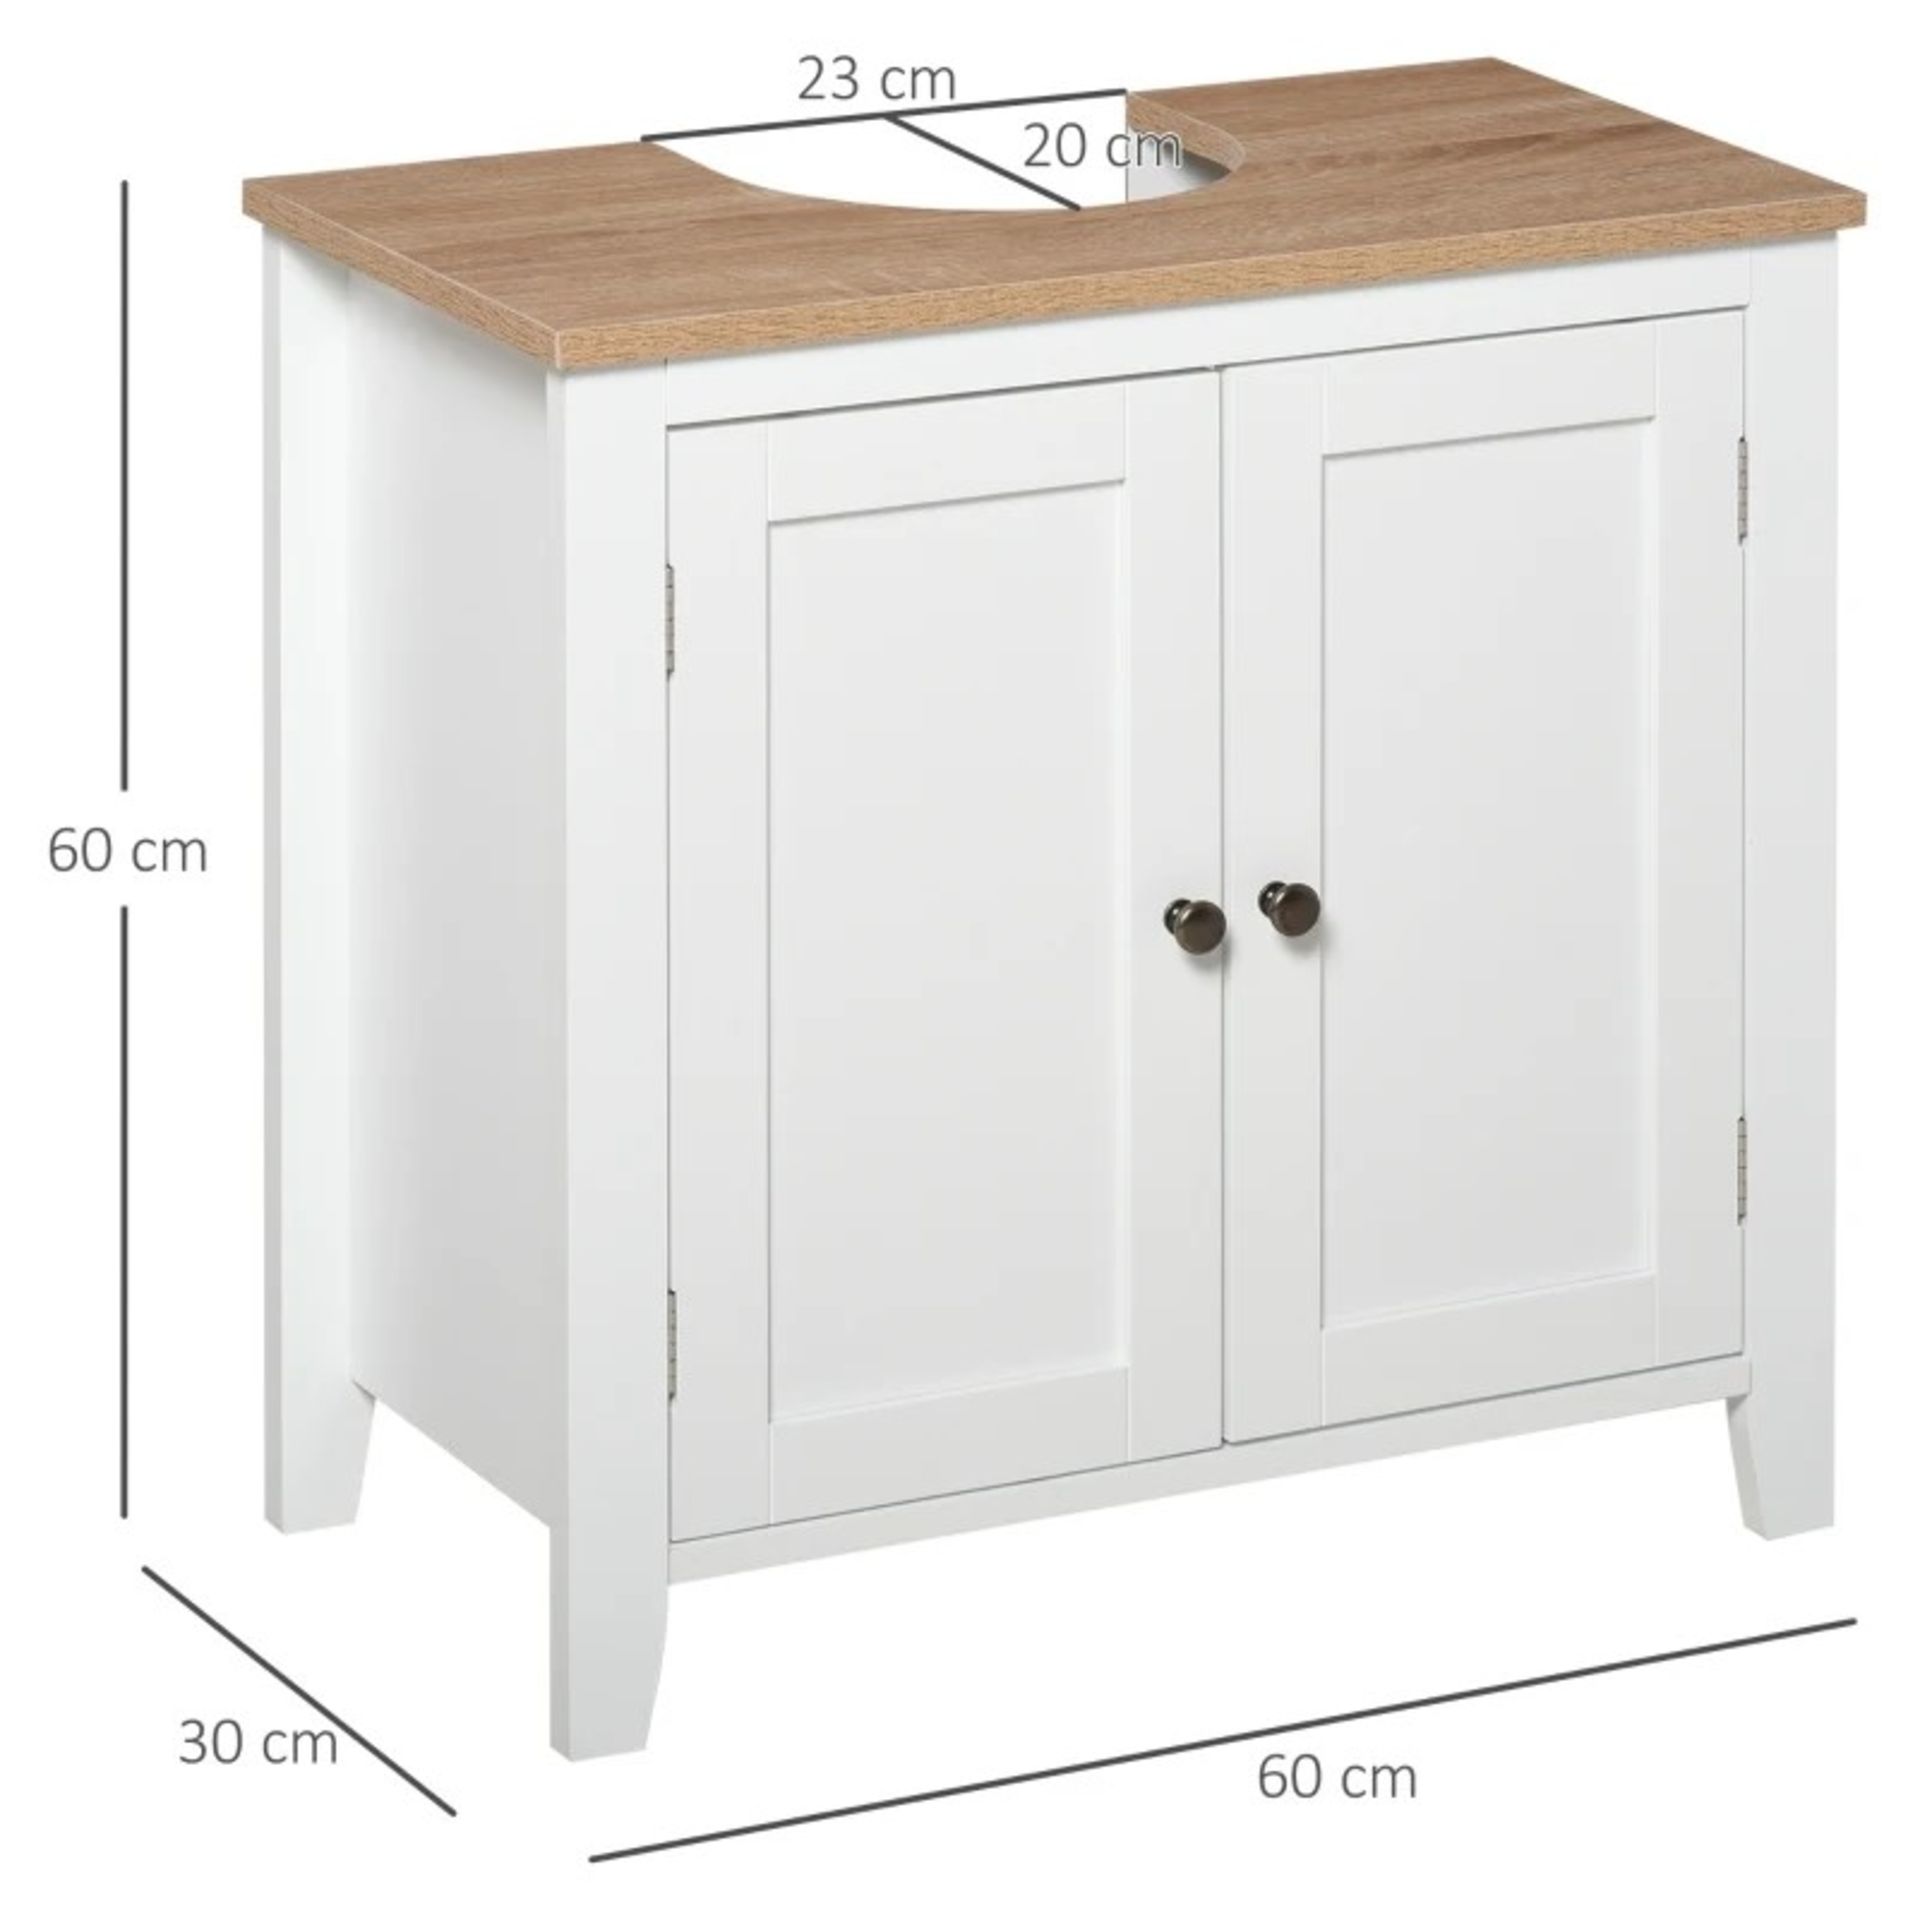 RRP £66.99 - kleankin Bathroom Pedestal Under Sink Cabinet Storage Standing Unit w/ 2 Door Space - Image 2 of 3